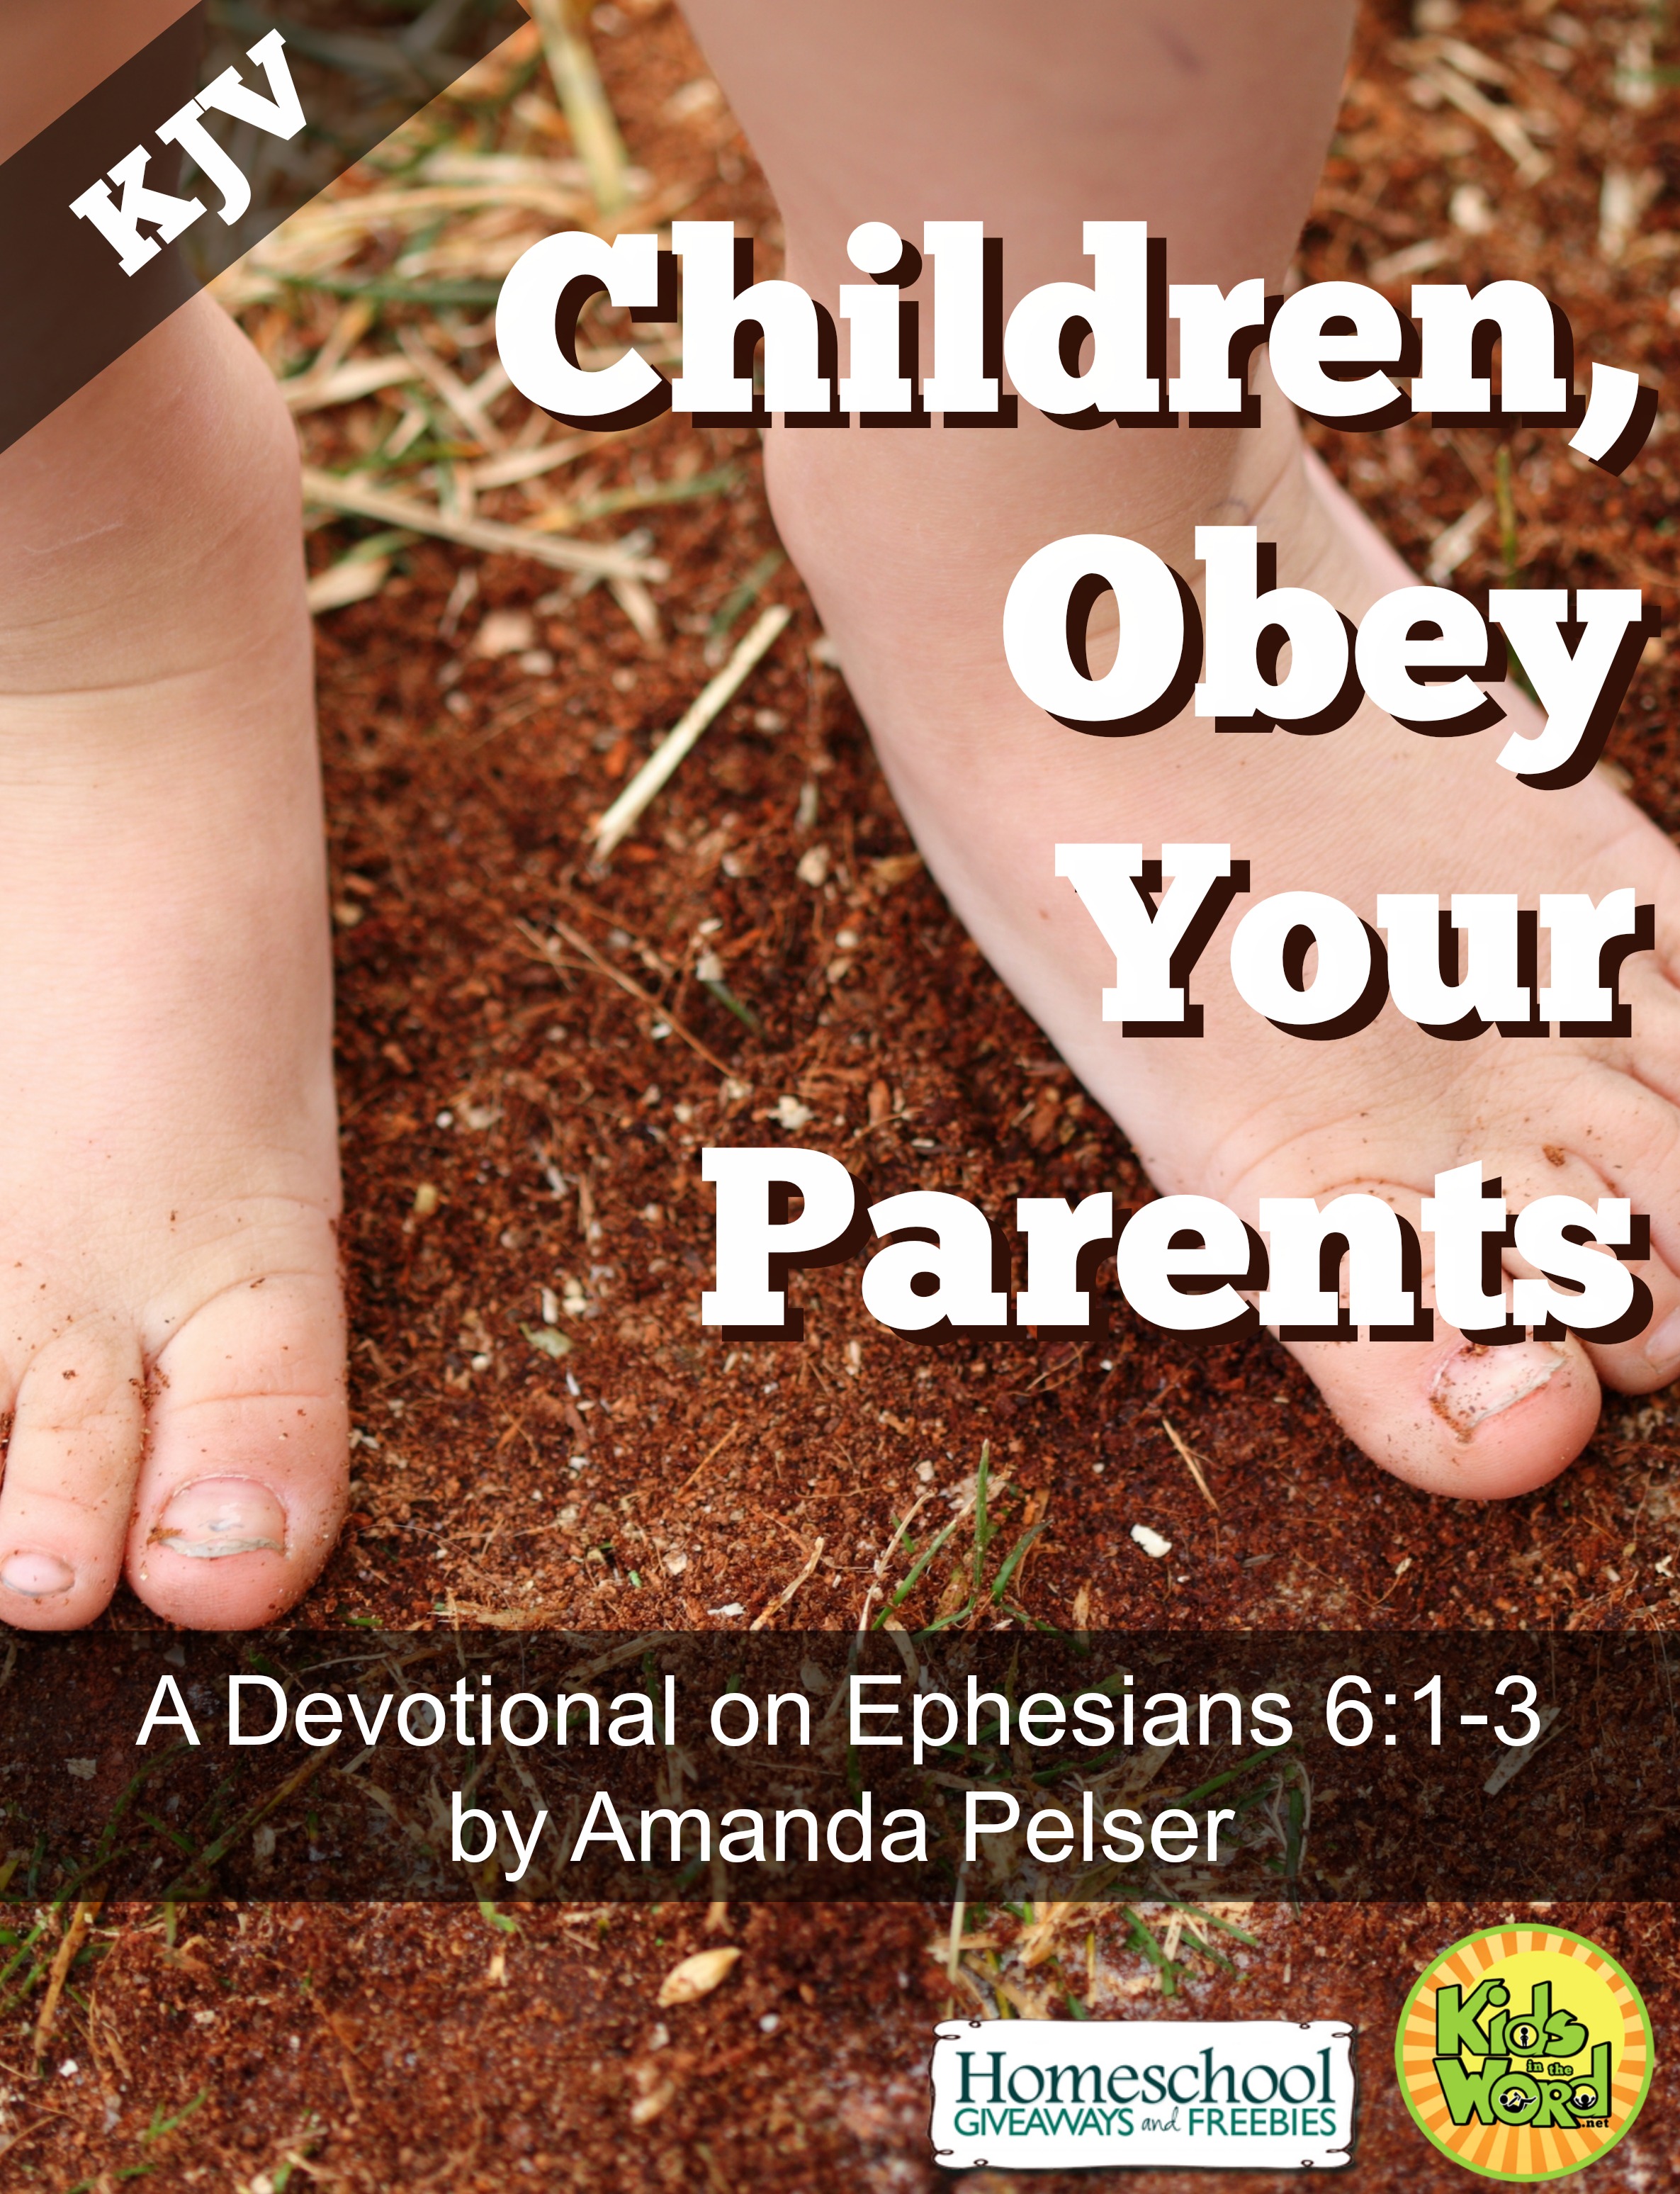 Children Obey Your Parents Cover KJV available at http://homeschoolgiveaways.com/2014/05/children-obey-your-parents